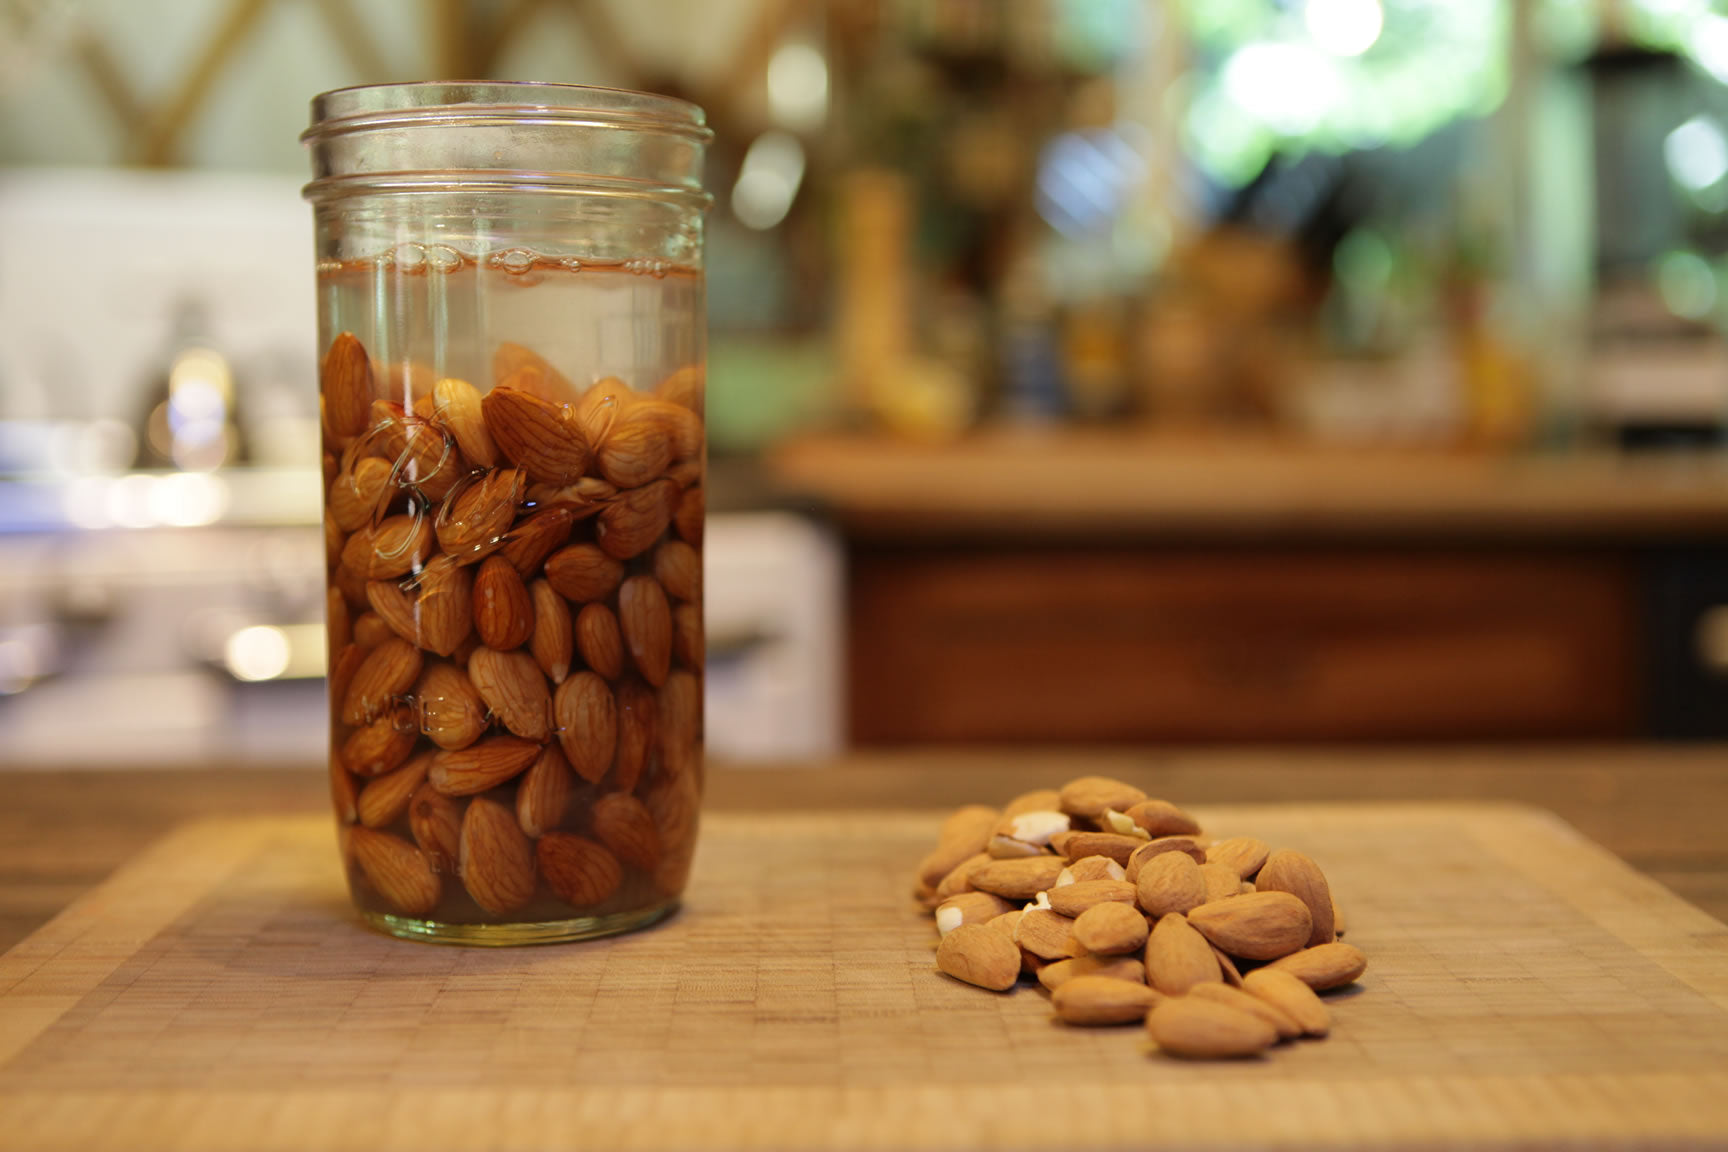 Soaking almonds